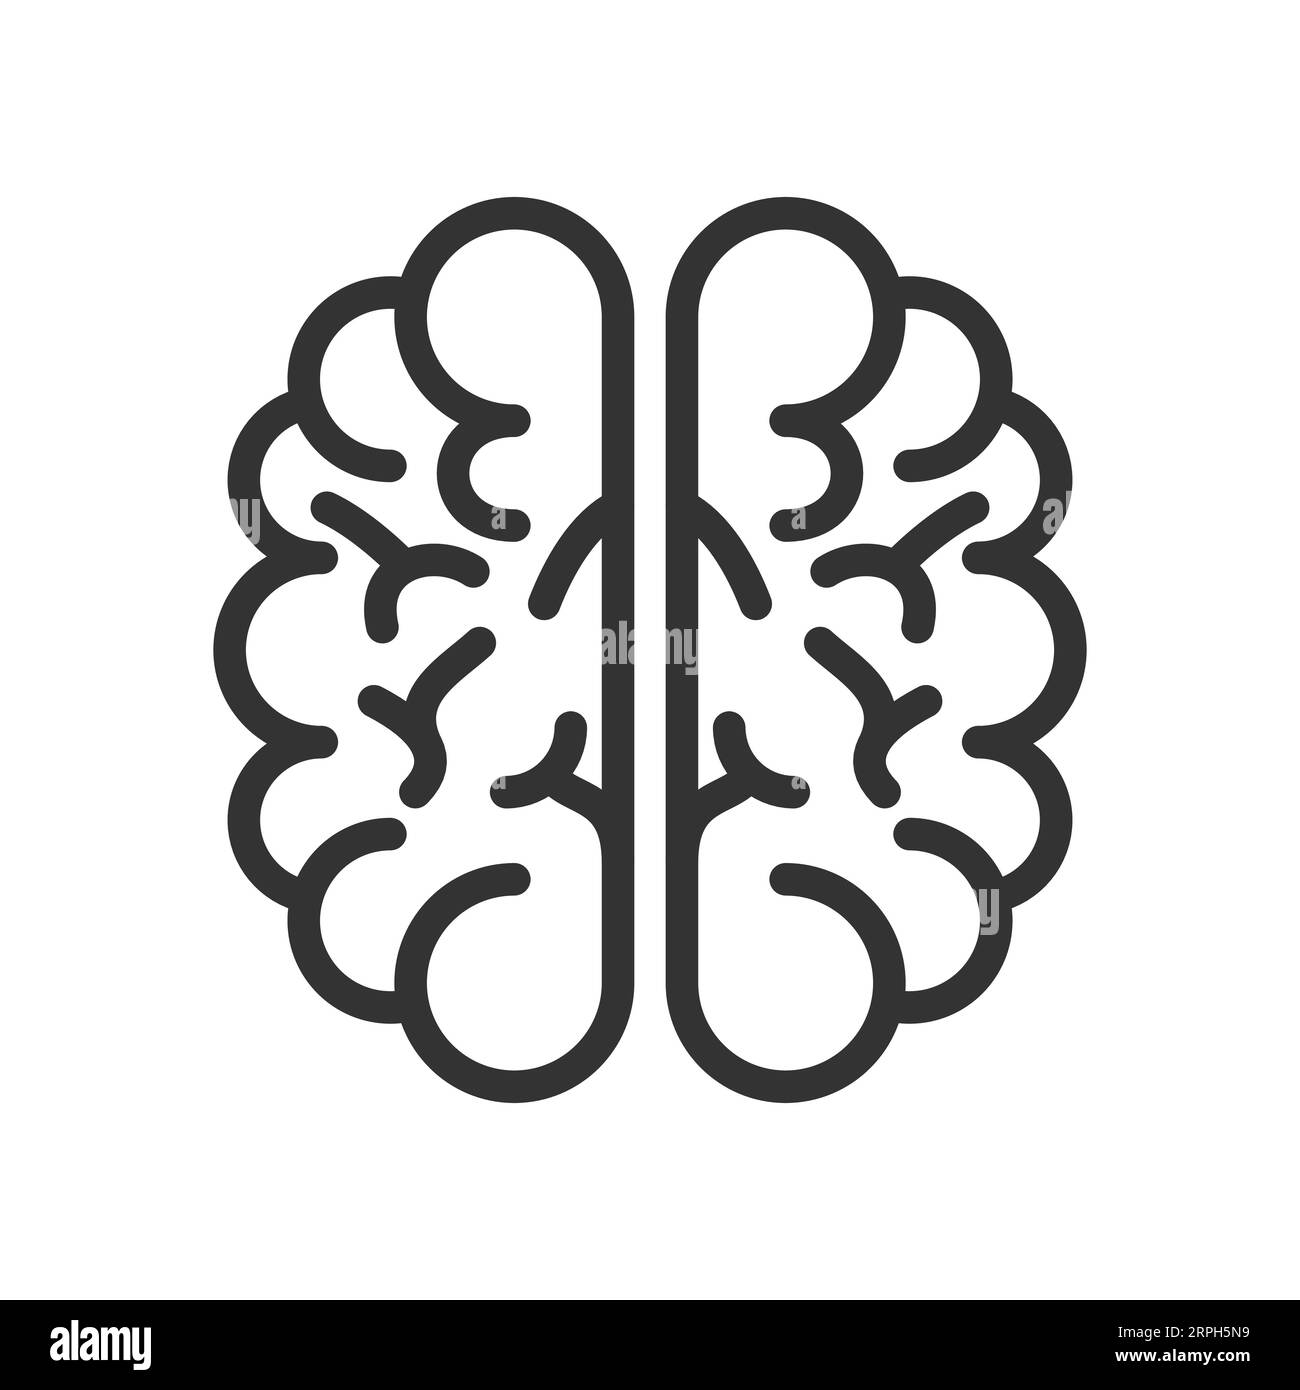 Human brain mind power icon Stock Vector